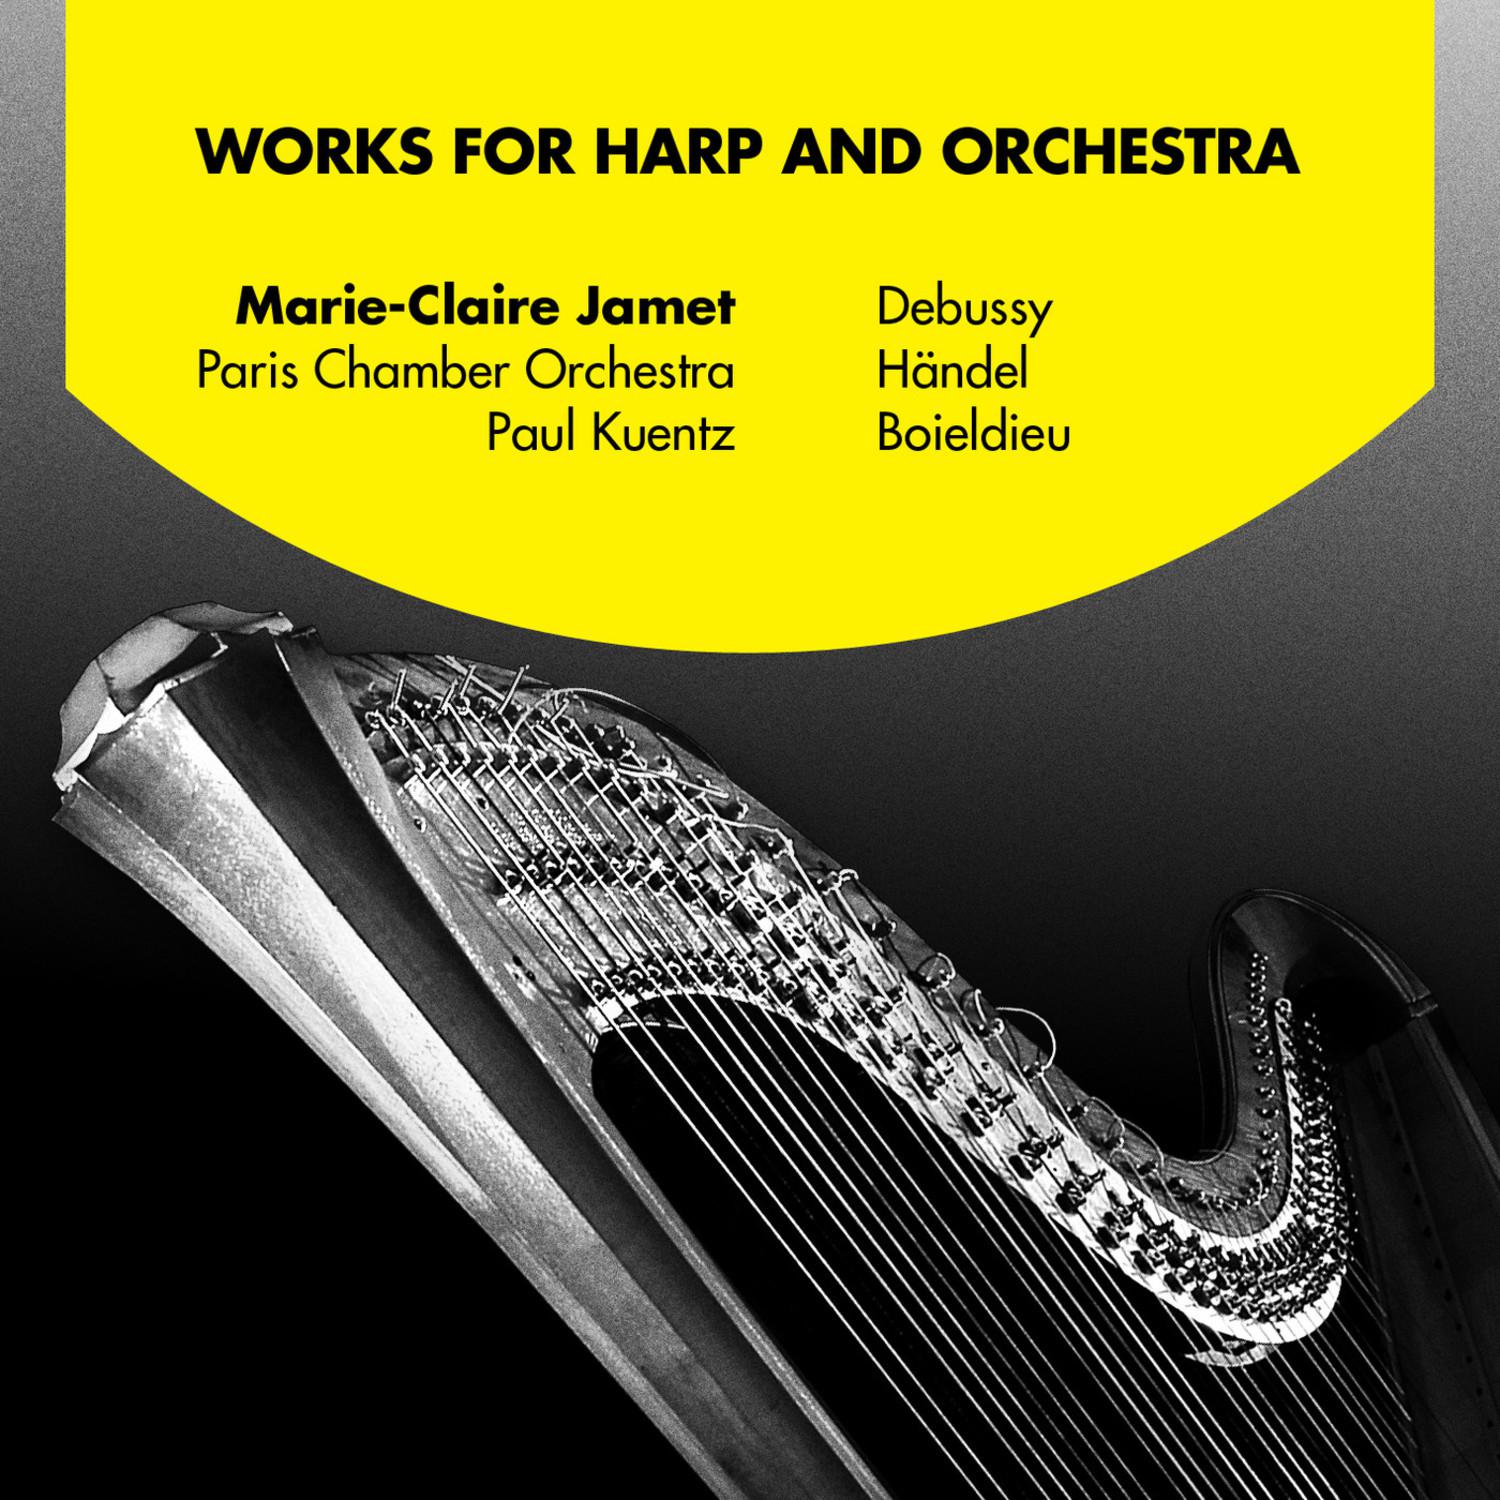 Concerto in B-Flat Major for Harp and Strings, HWV 294: I. Andante - Allegro